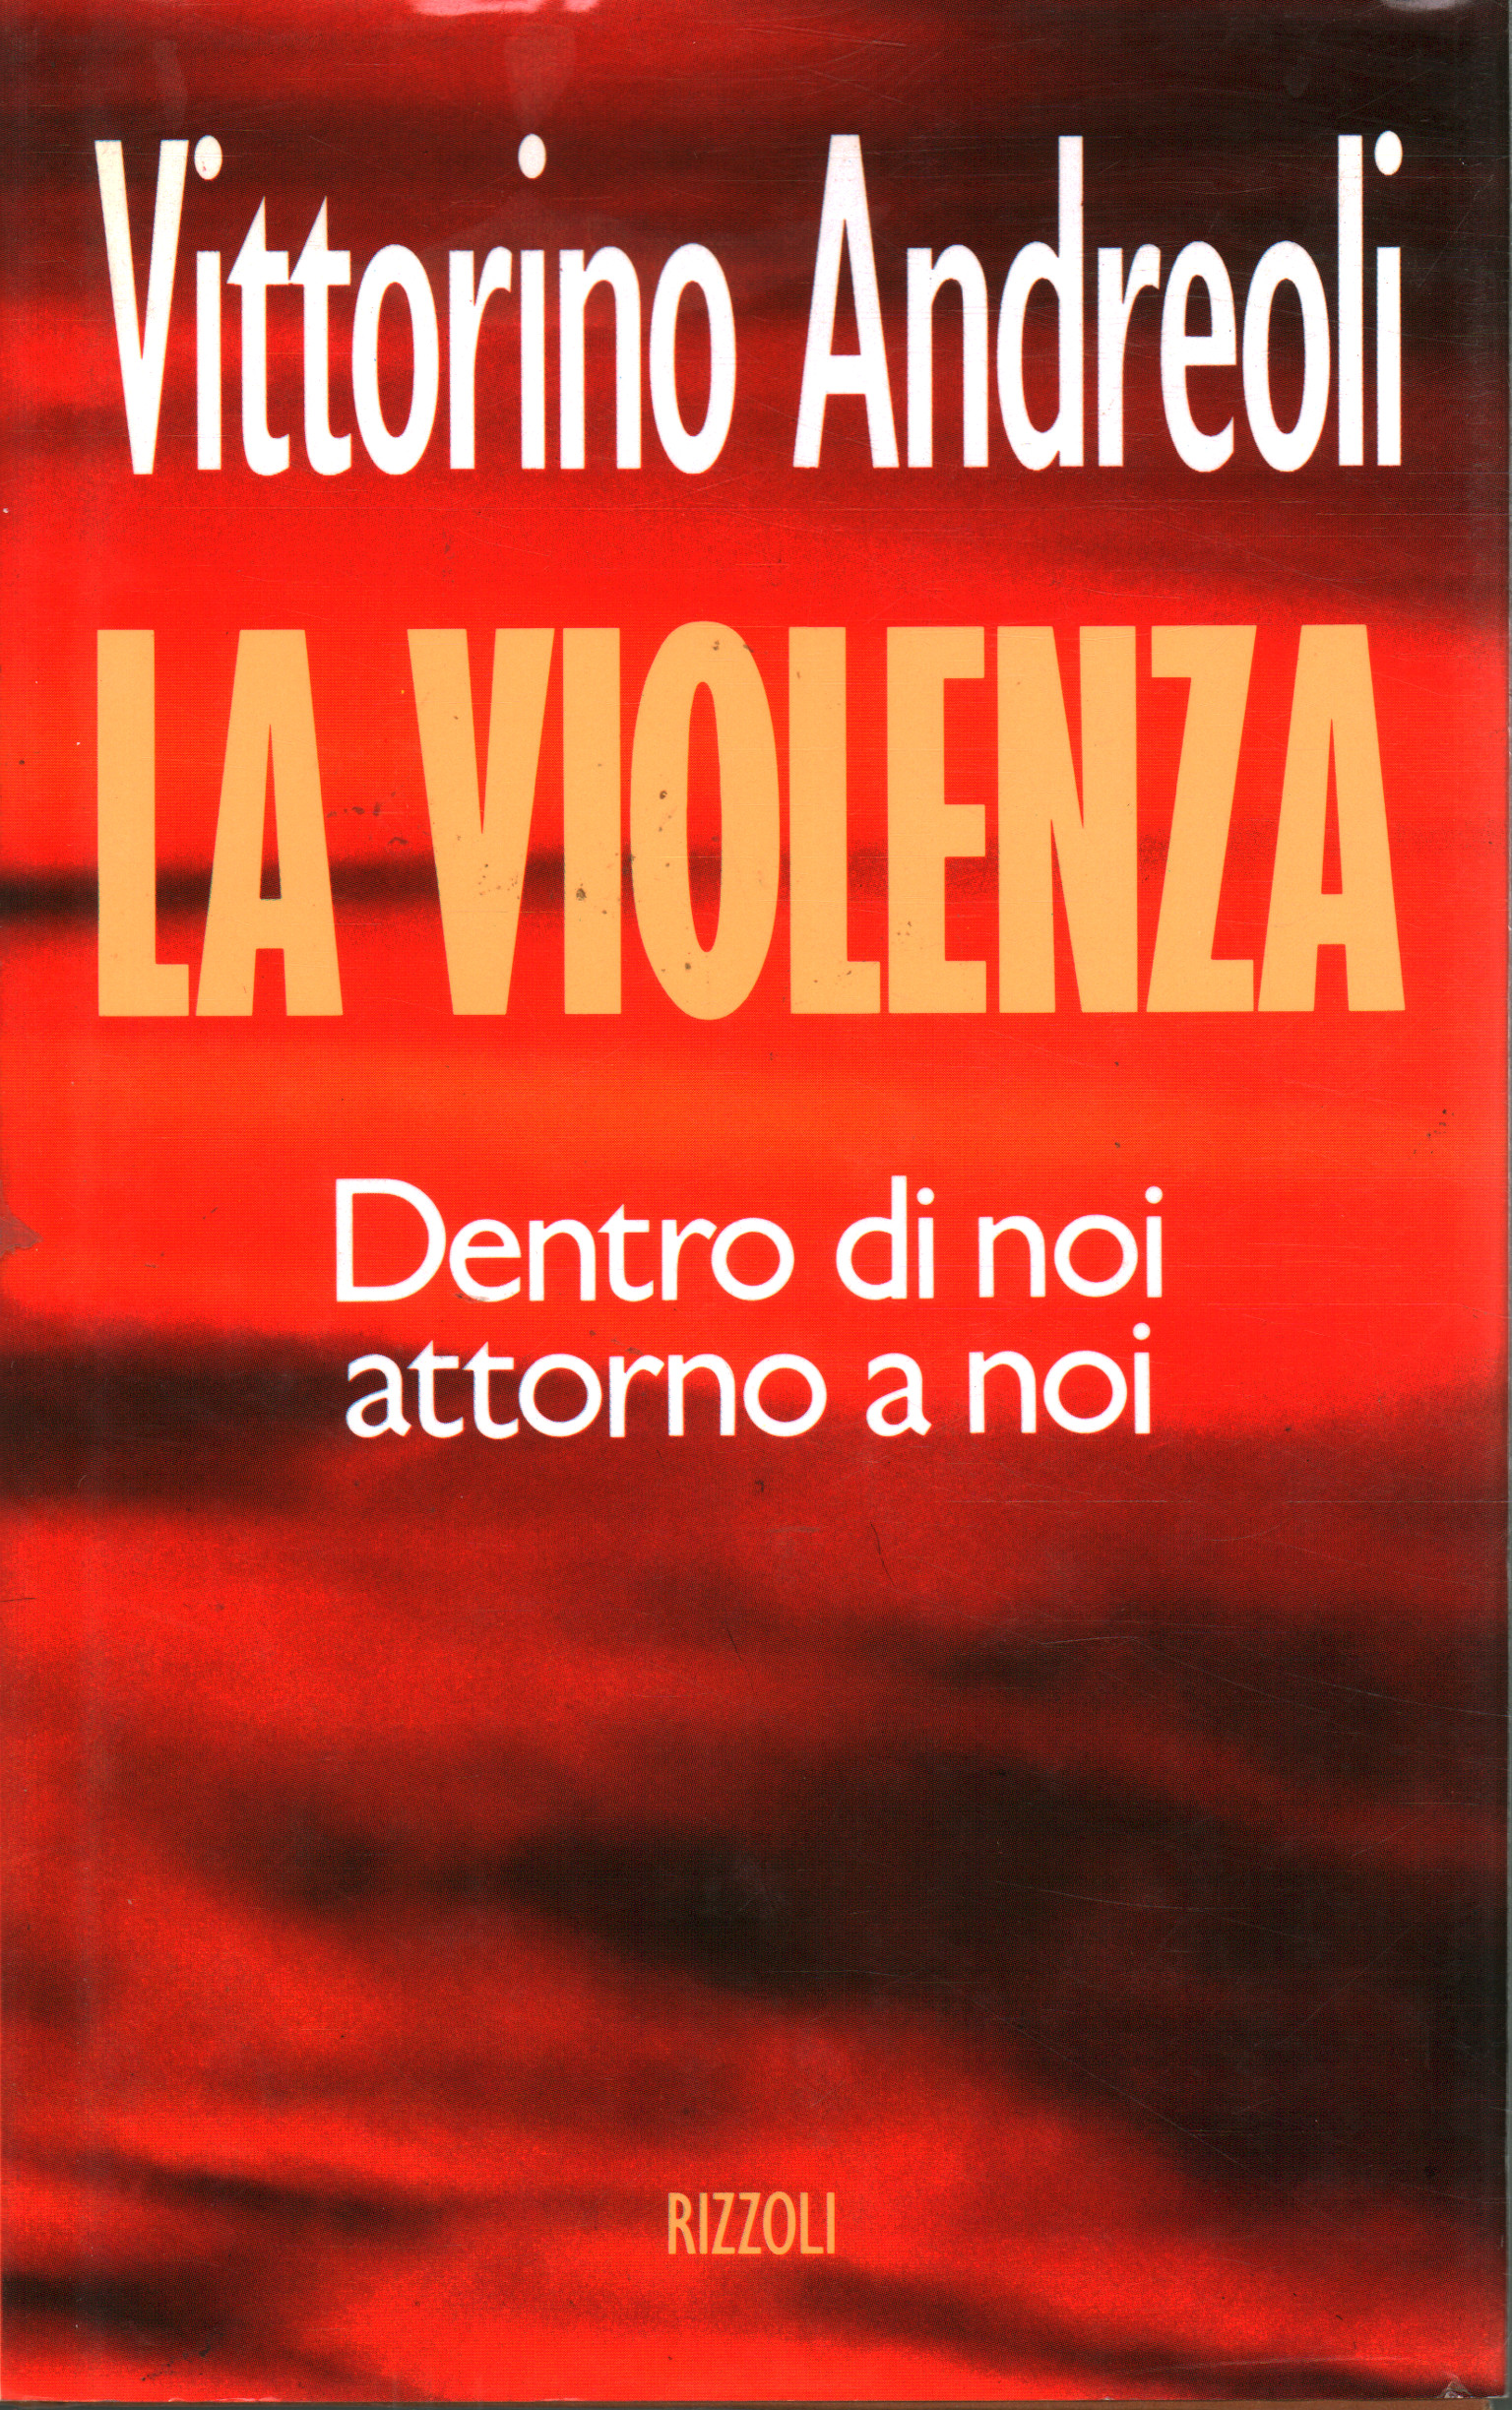 Violence, Vittorino Andreoli